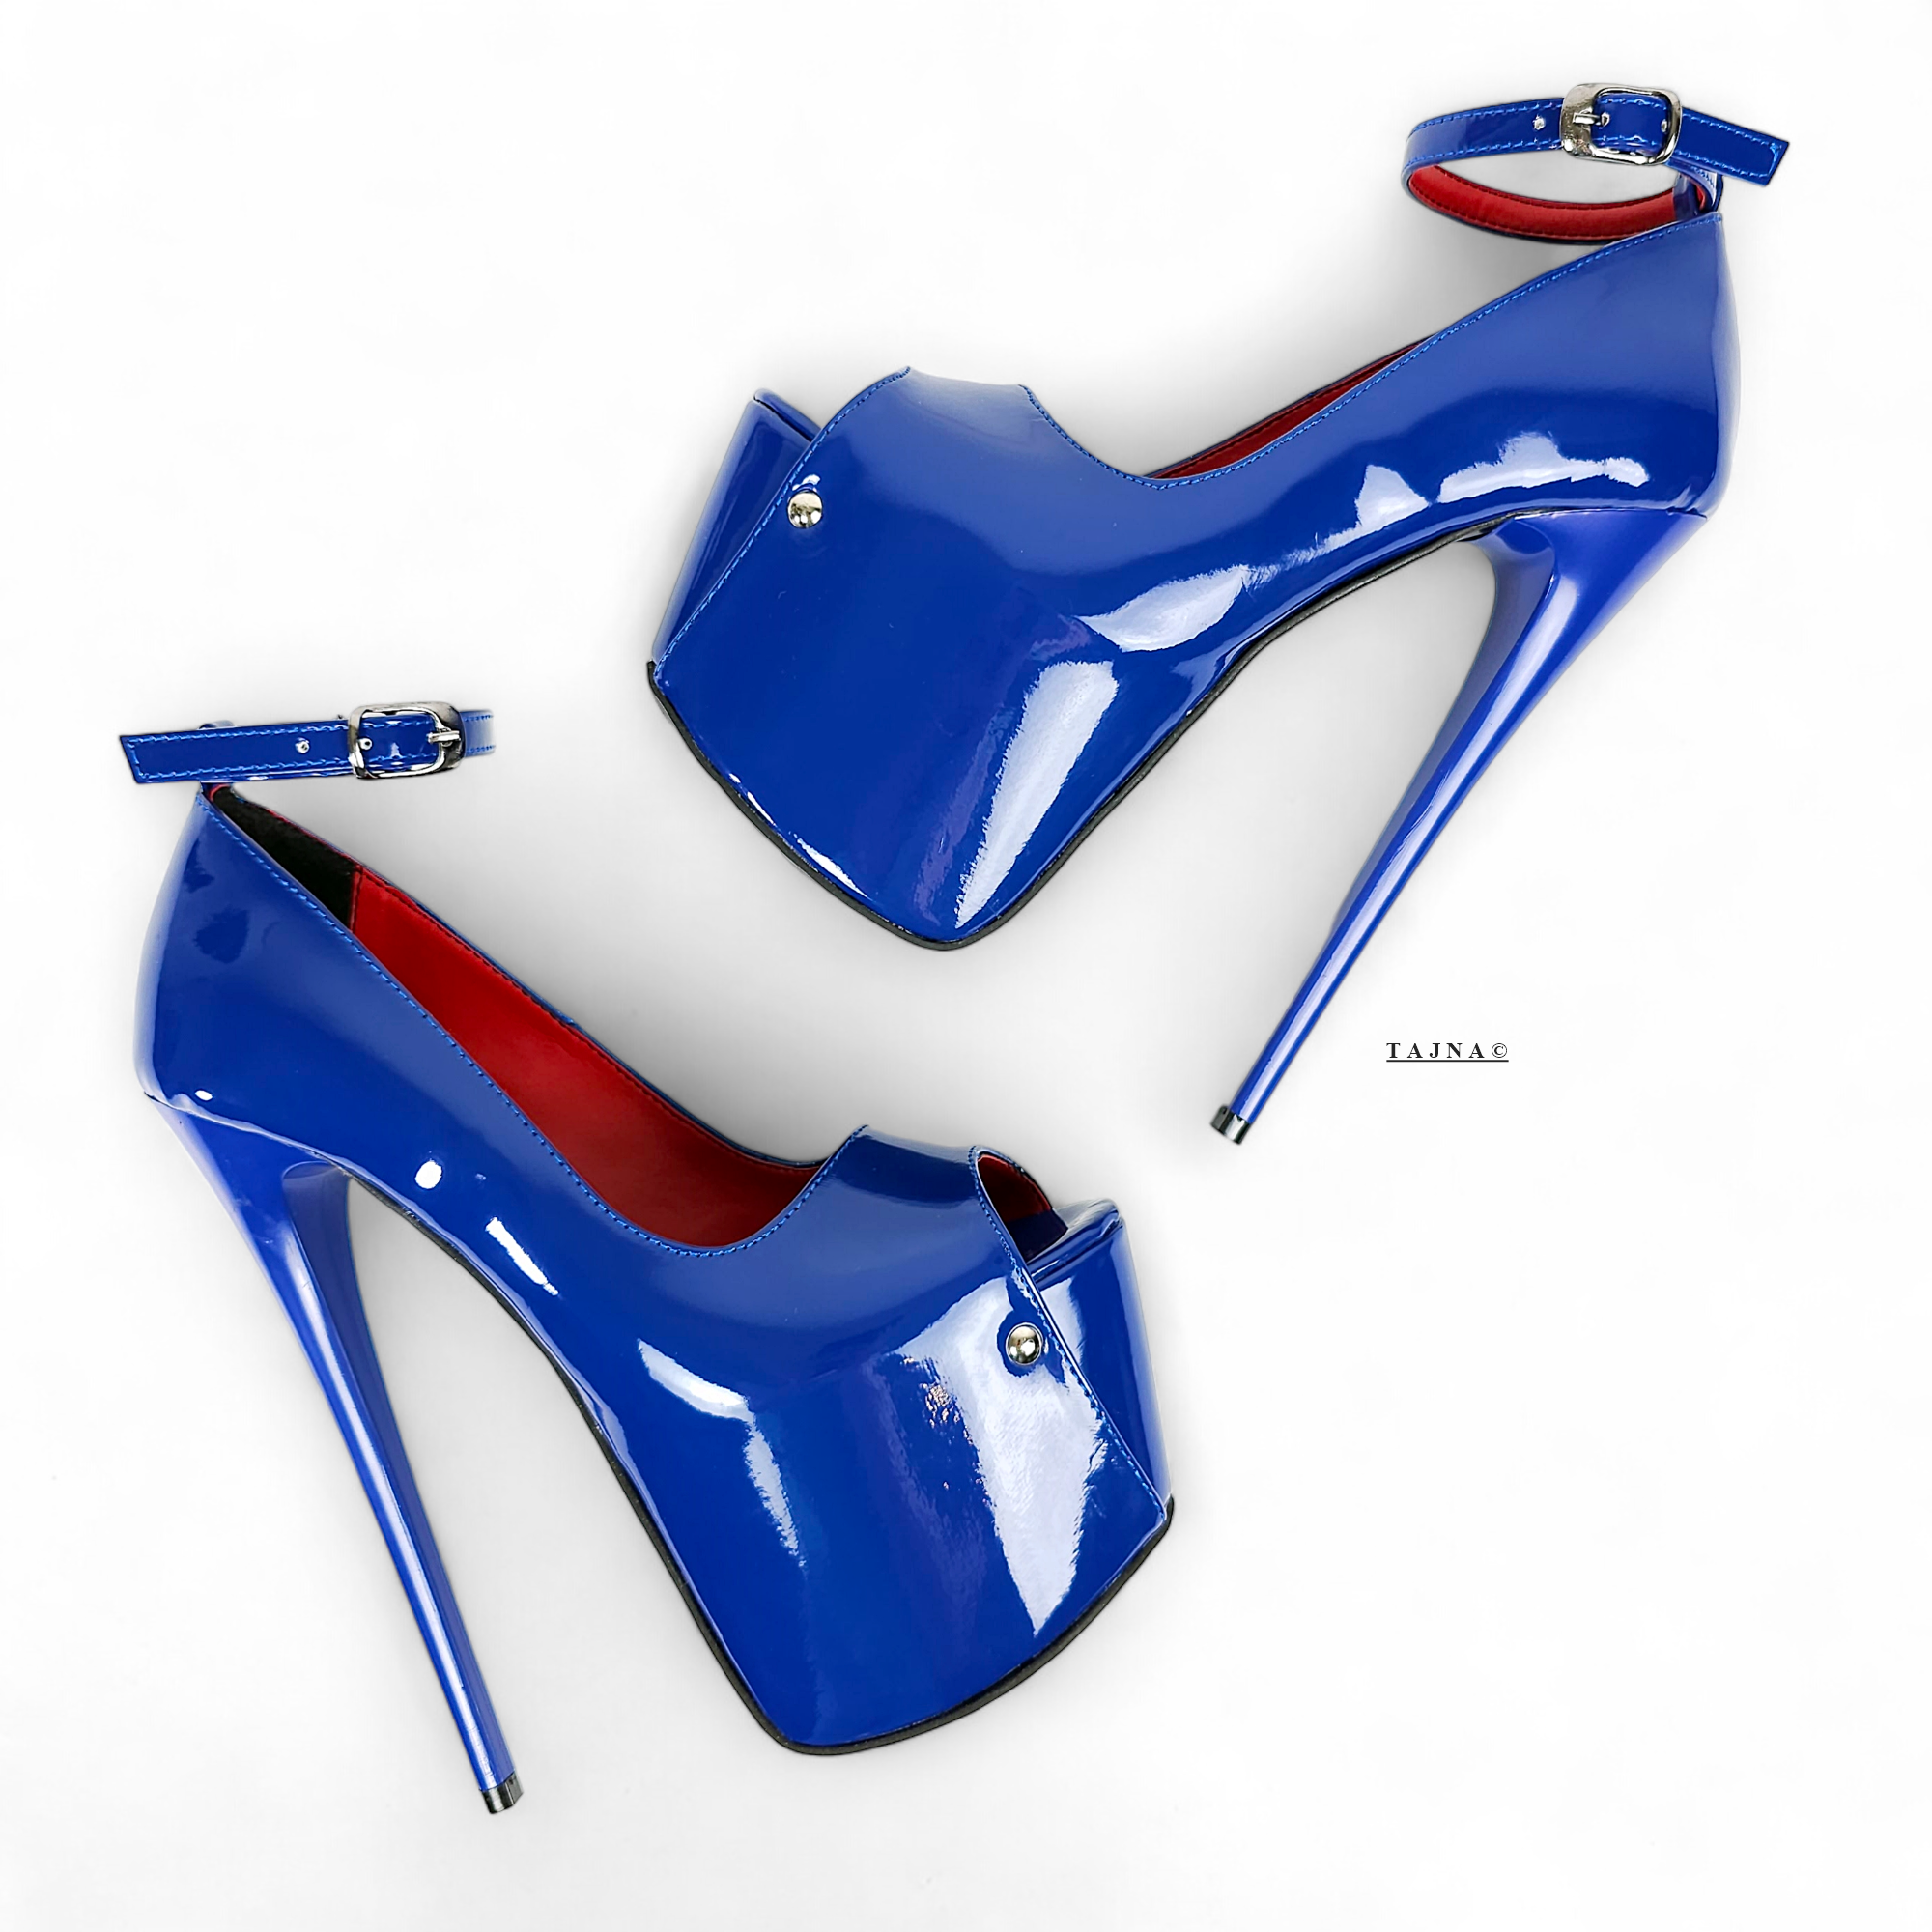 blue-gloss-high-heel-ankle-strap-platform-shoes-tajna-club-shoes